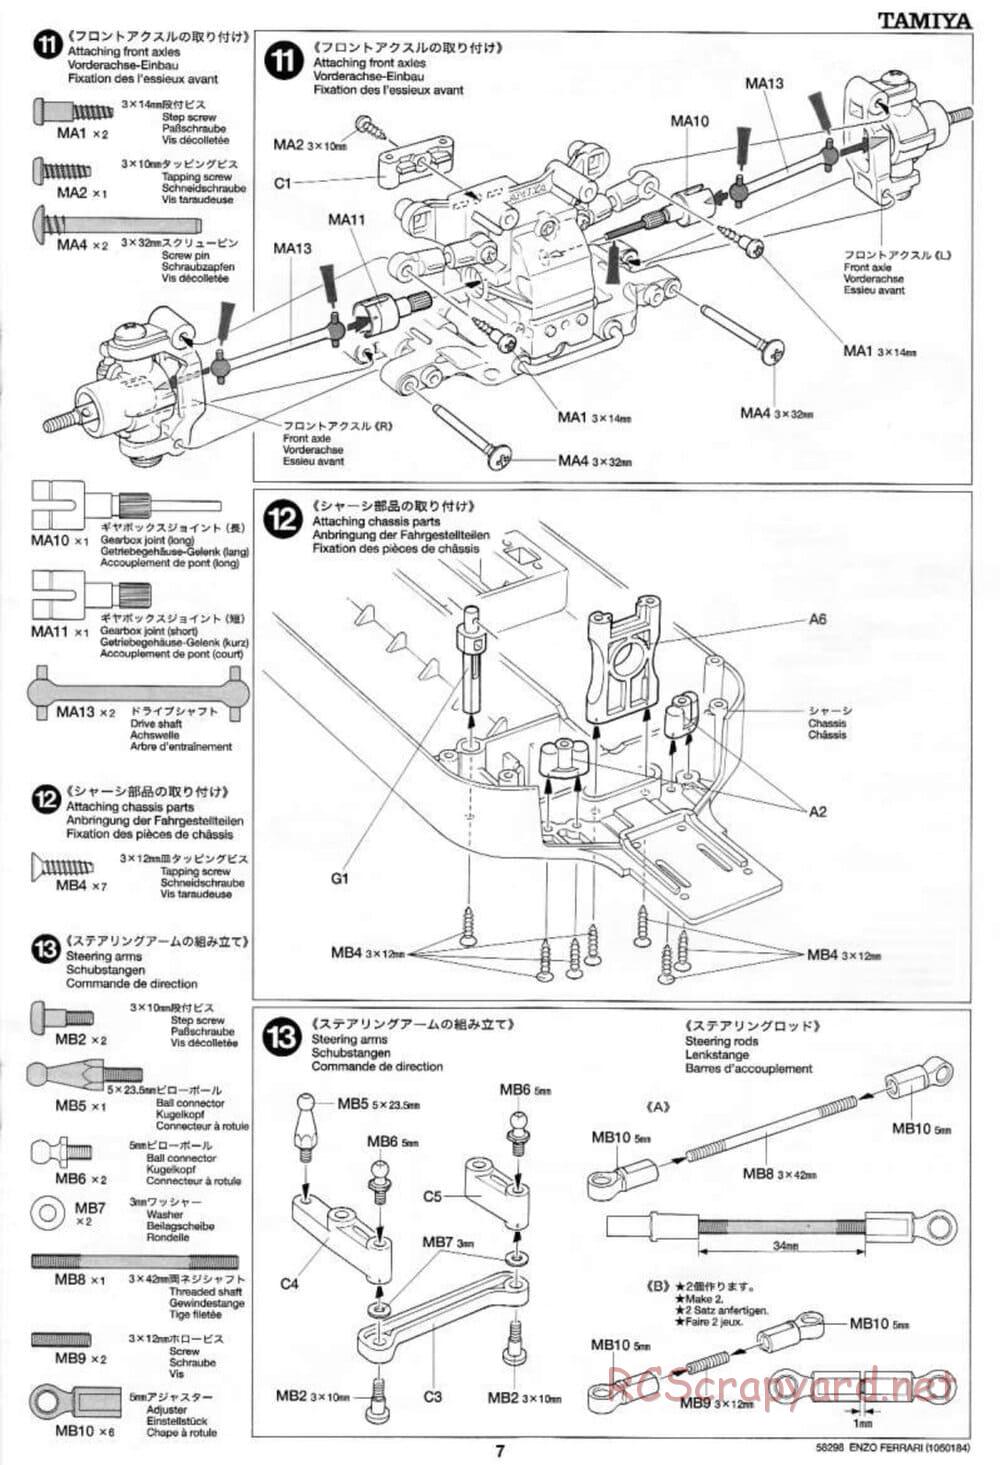 Tamiya - Enzo Ferrari - TB-01 Chassis - Manual - Page 7